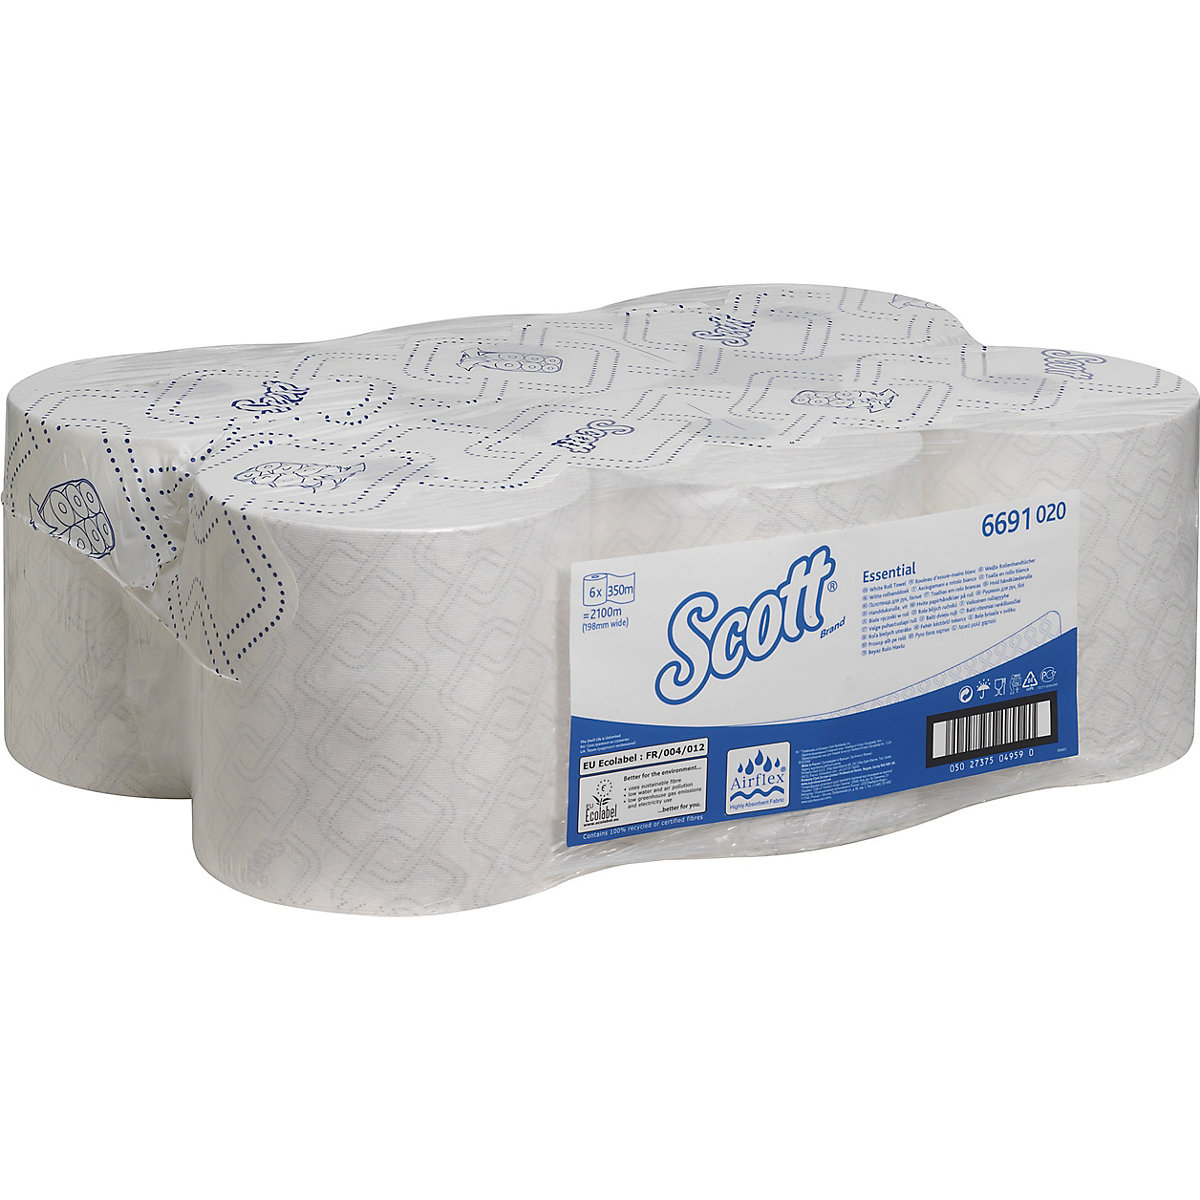 Scott® ESSENTIAL™ paper towels – Kimberly-Clark